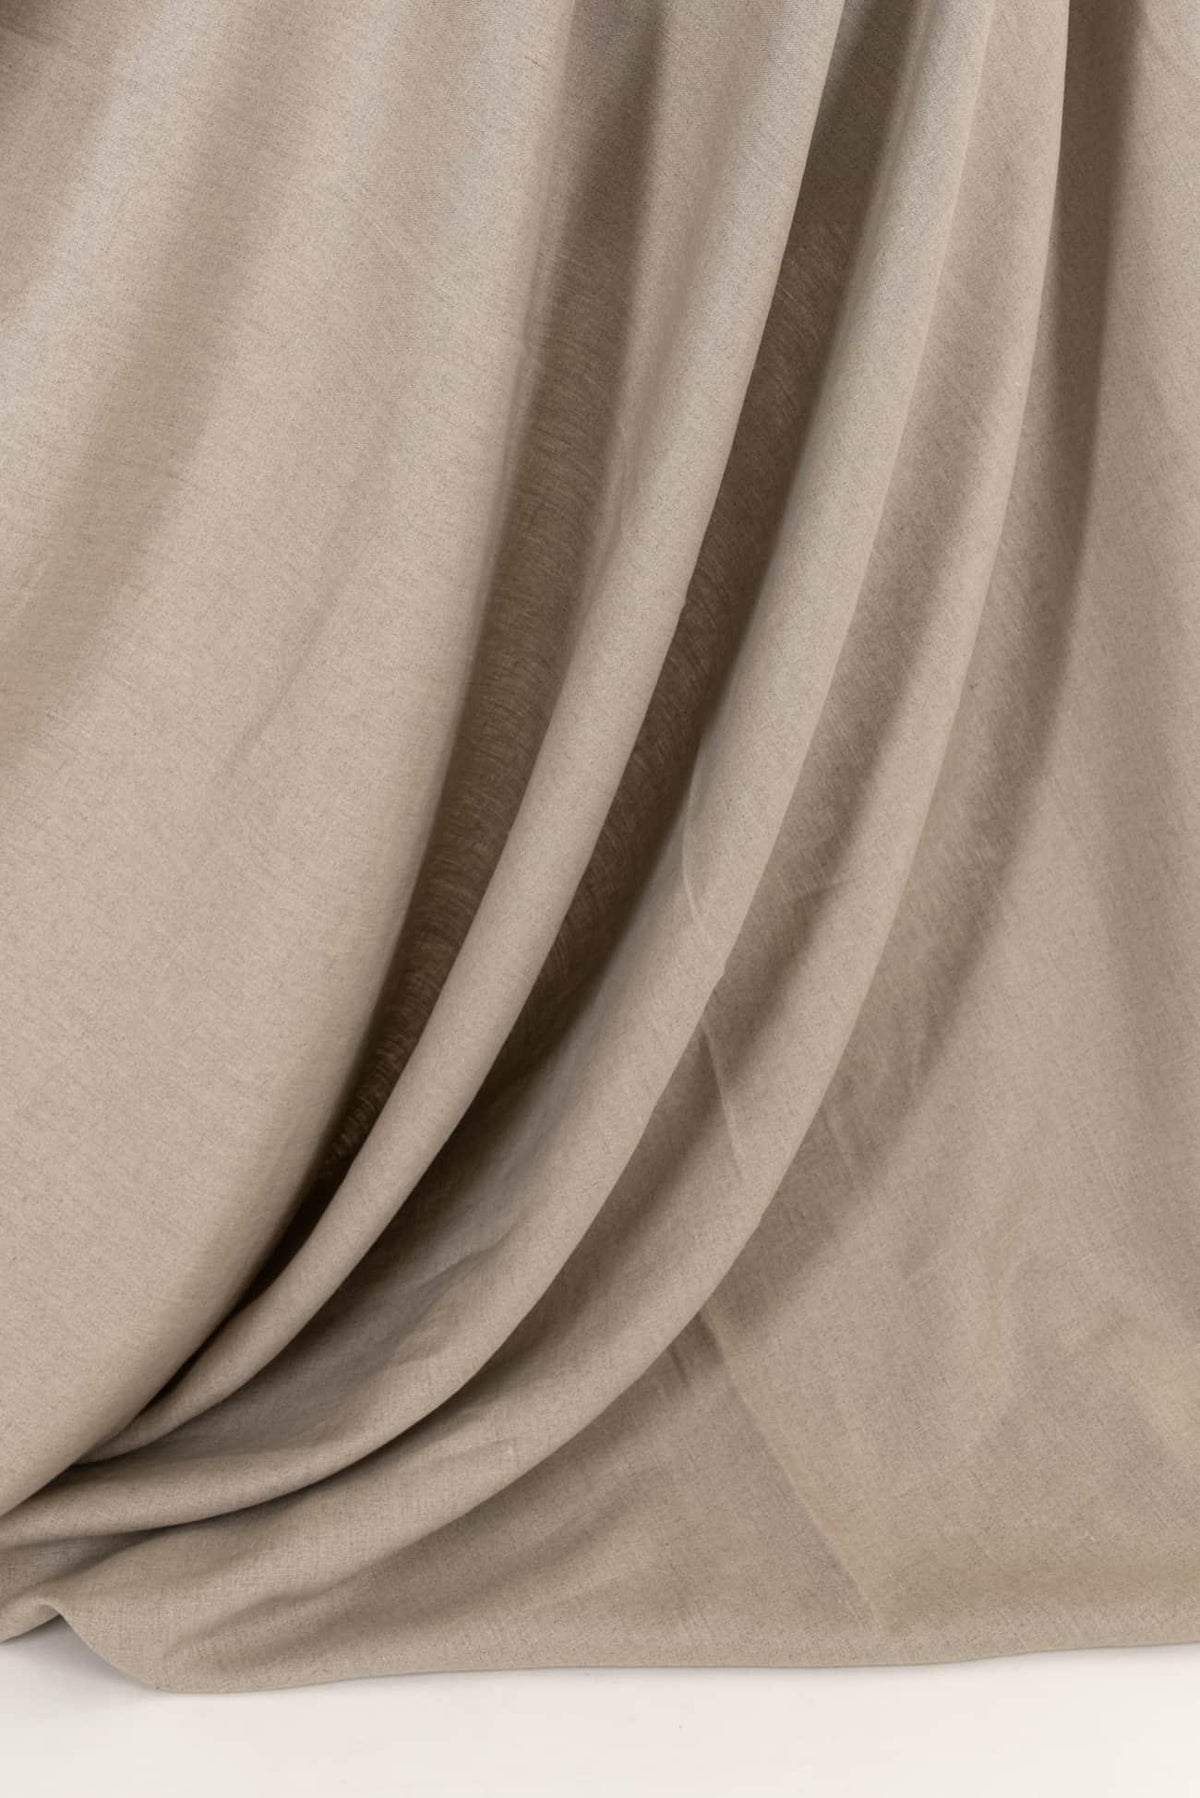 Sandstone Linen Woven - Marcy Tilton Fabrics